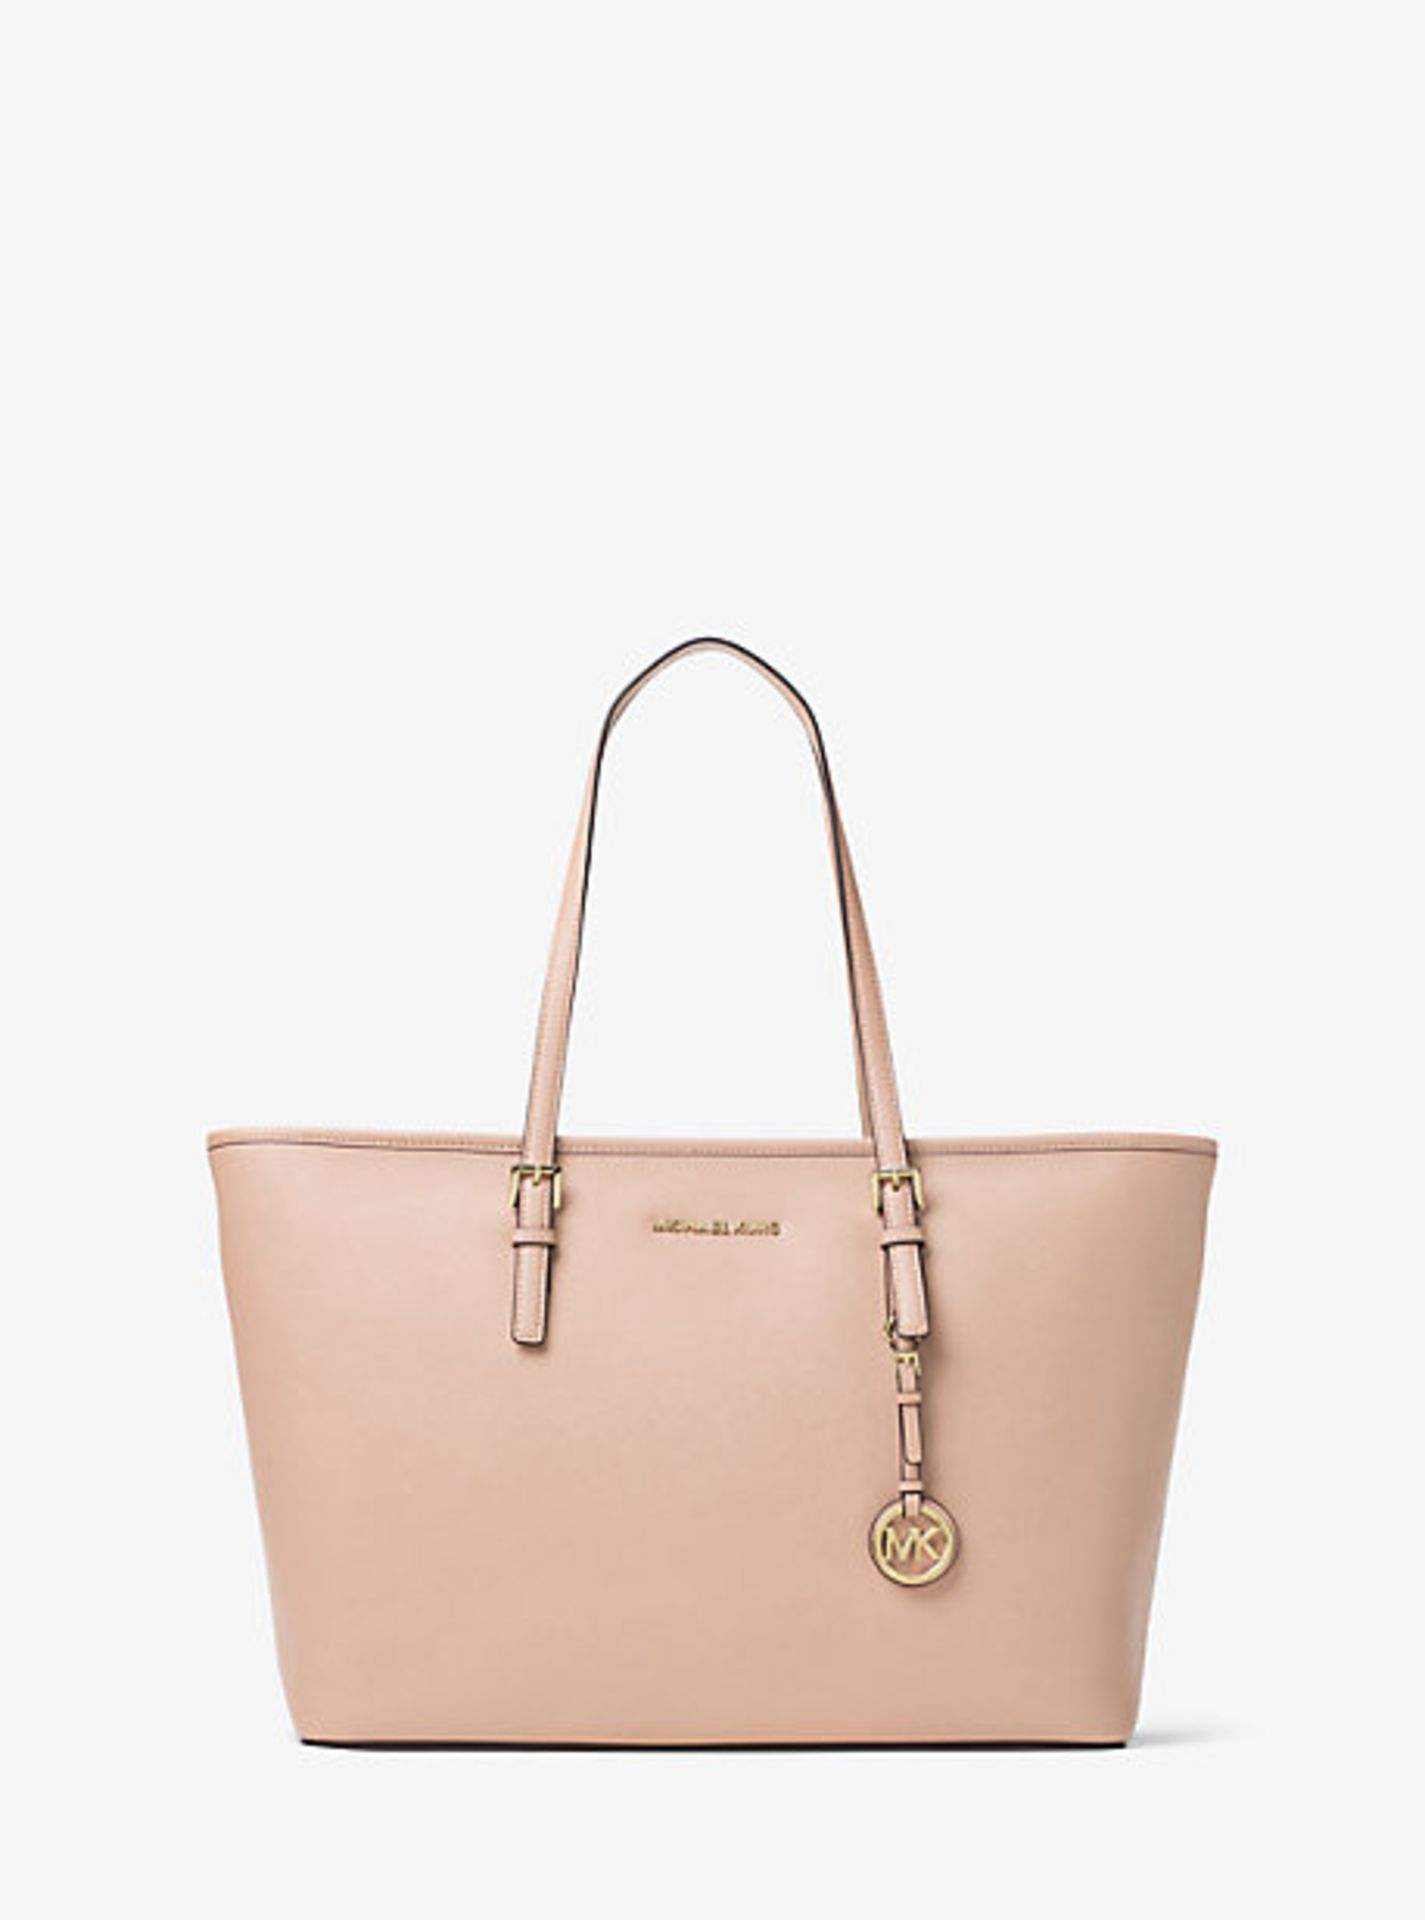 + VAT Brand New Ladies Michael Kors Soft Pink Jet Set Travel Tote Bag (ISP £277.78 The Little Green